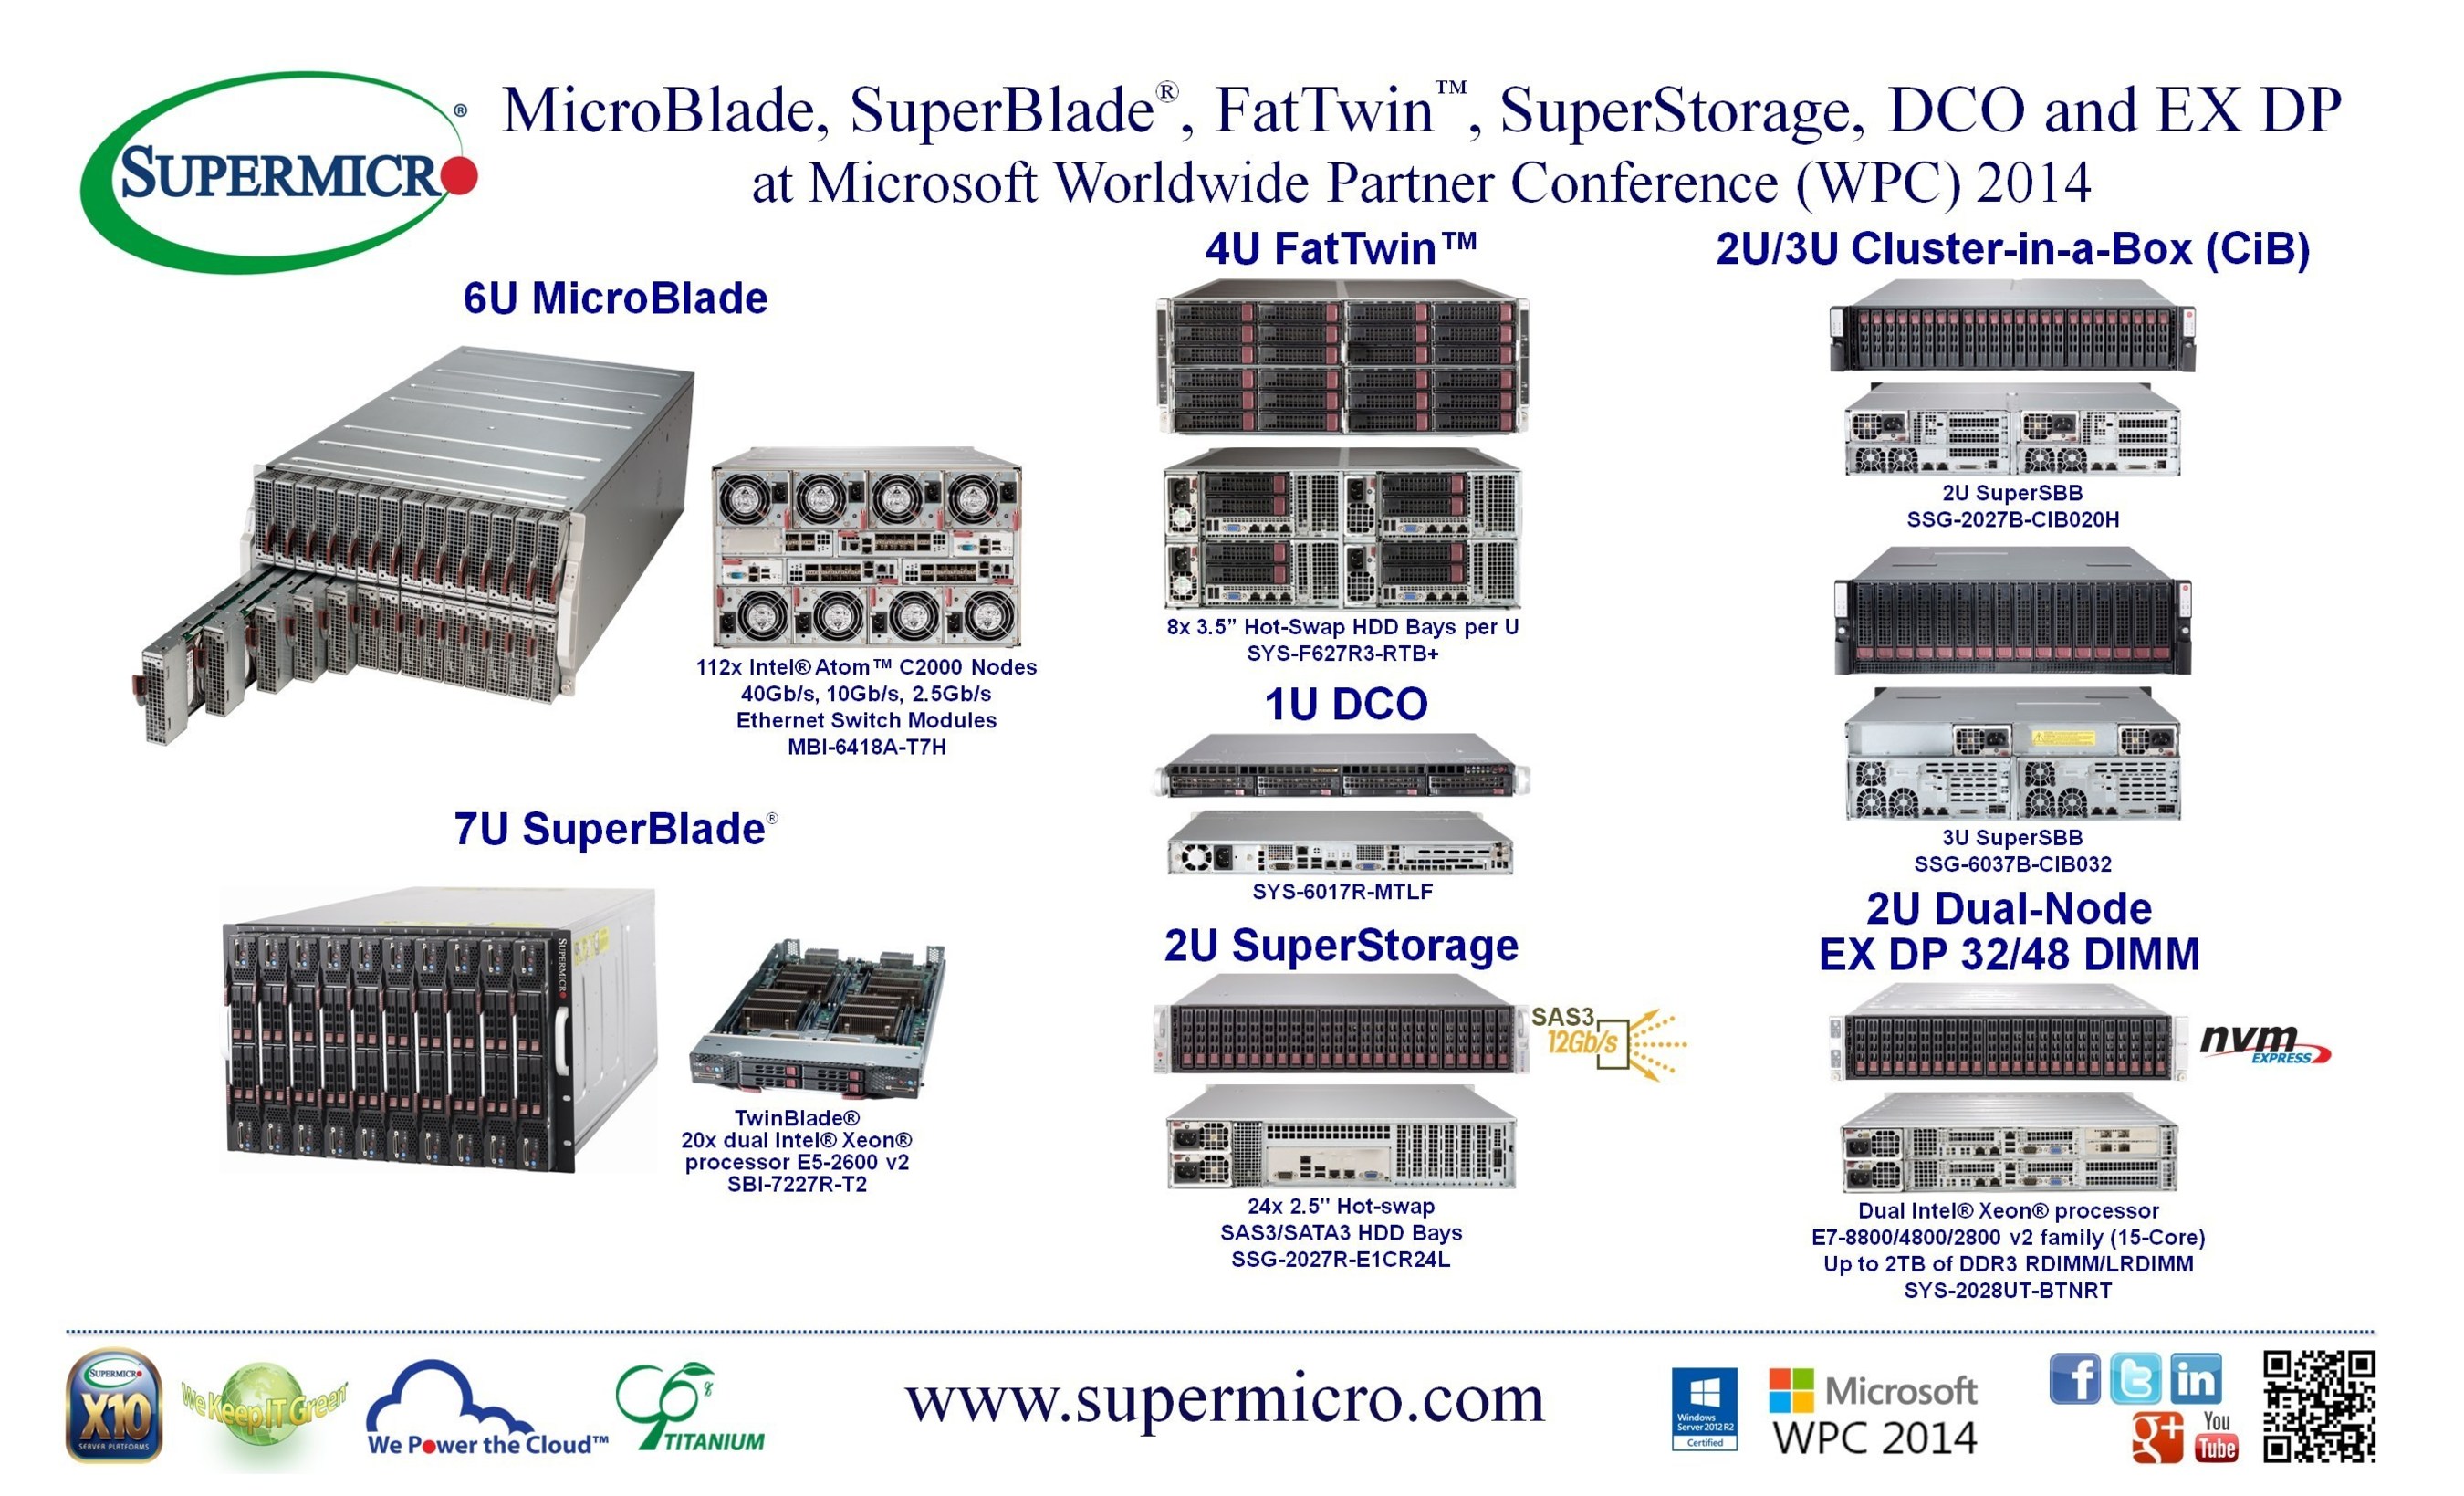 Supermicro(R) MicroBlade, SuperBlade(R), FatTwin(TM), SuperStorage, DCO & EX DP @ WPC 2014 (PRNewsFoto/Super Micro Computer, Inc.)